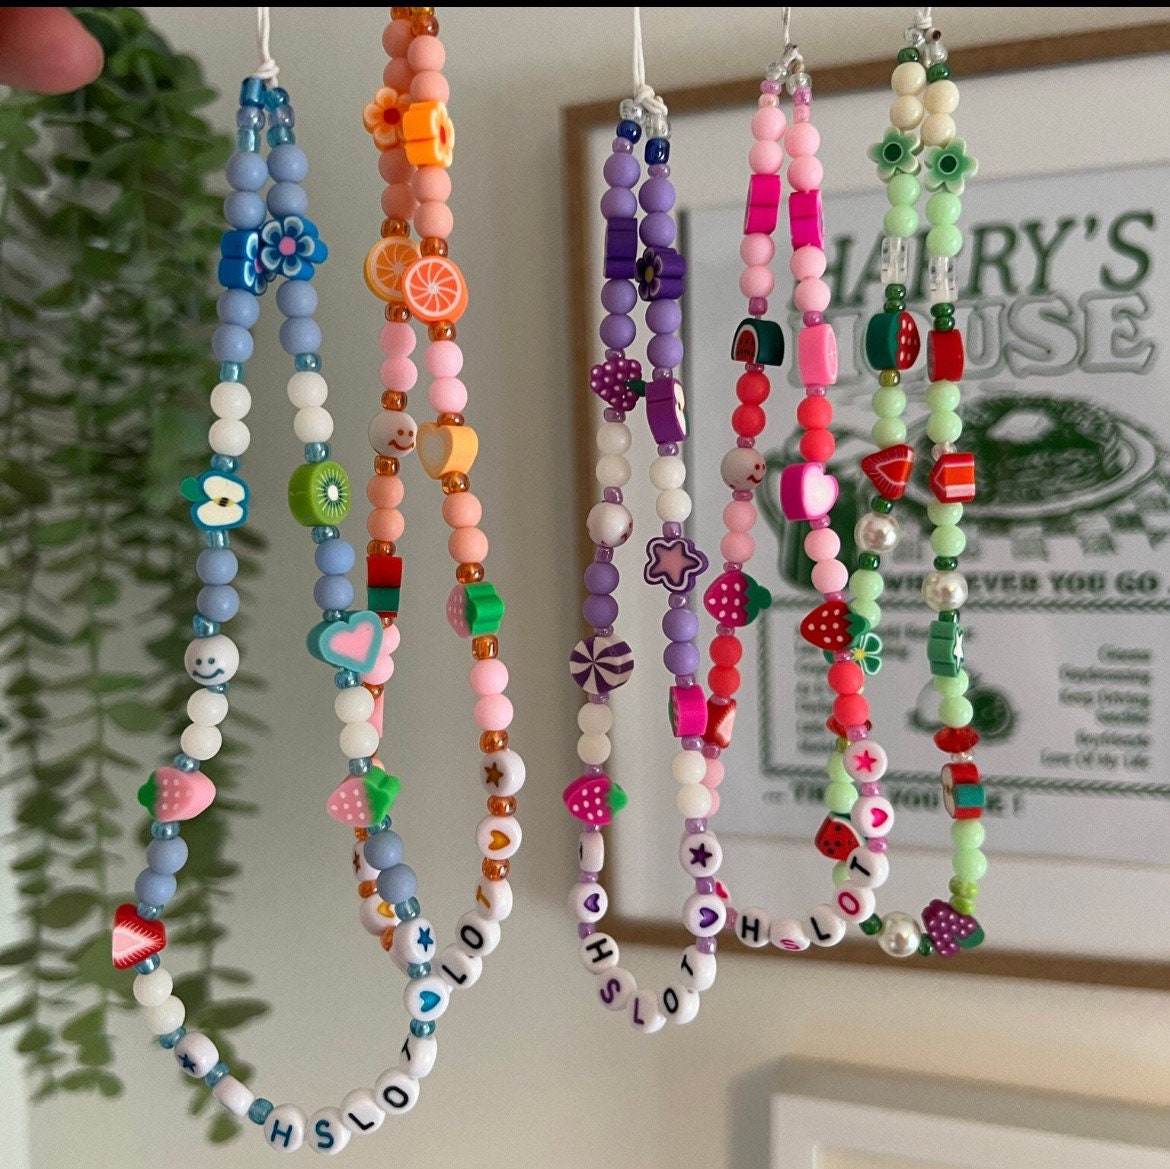 Mixed Acrylic Phone Charm Beads, 50g Acrylic Beads, DIY Bead